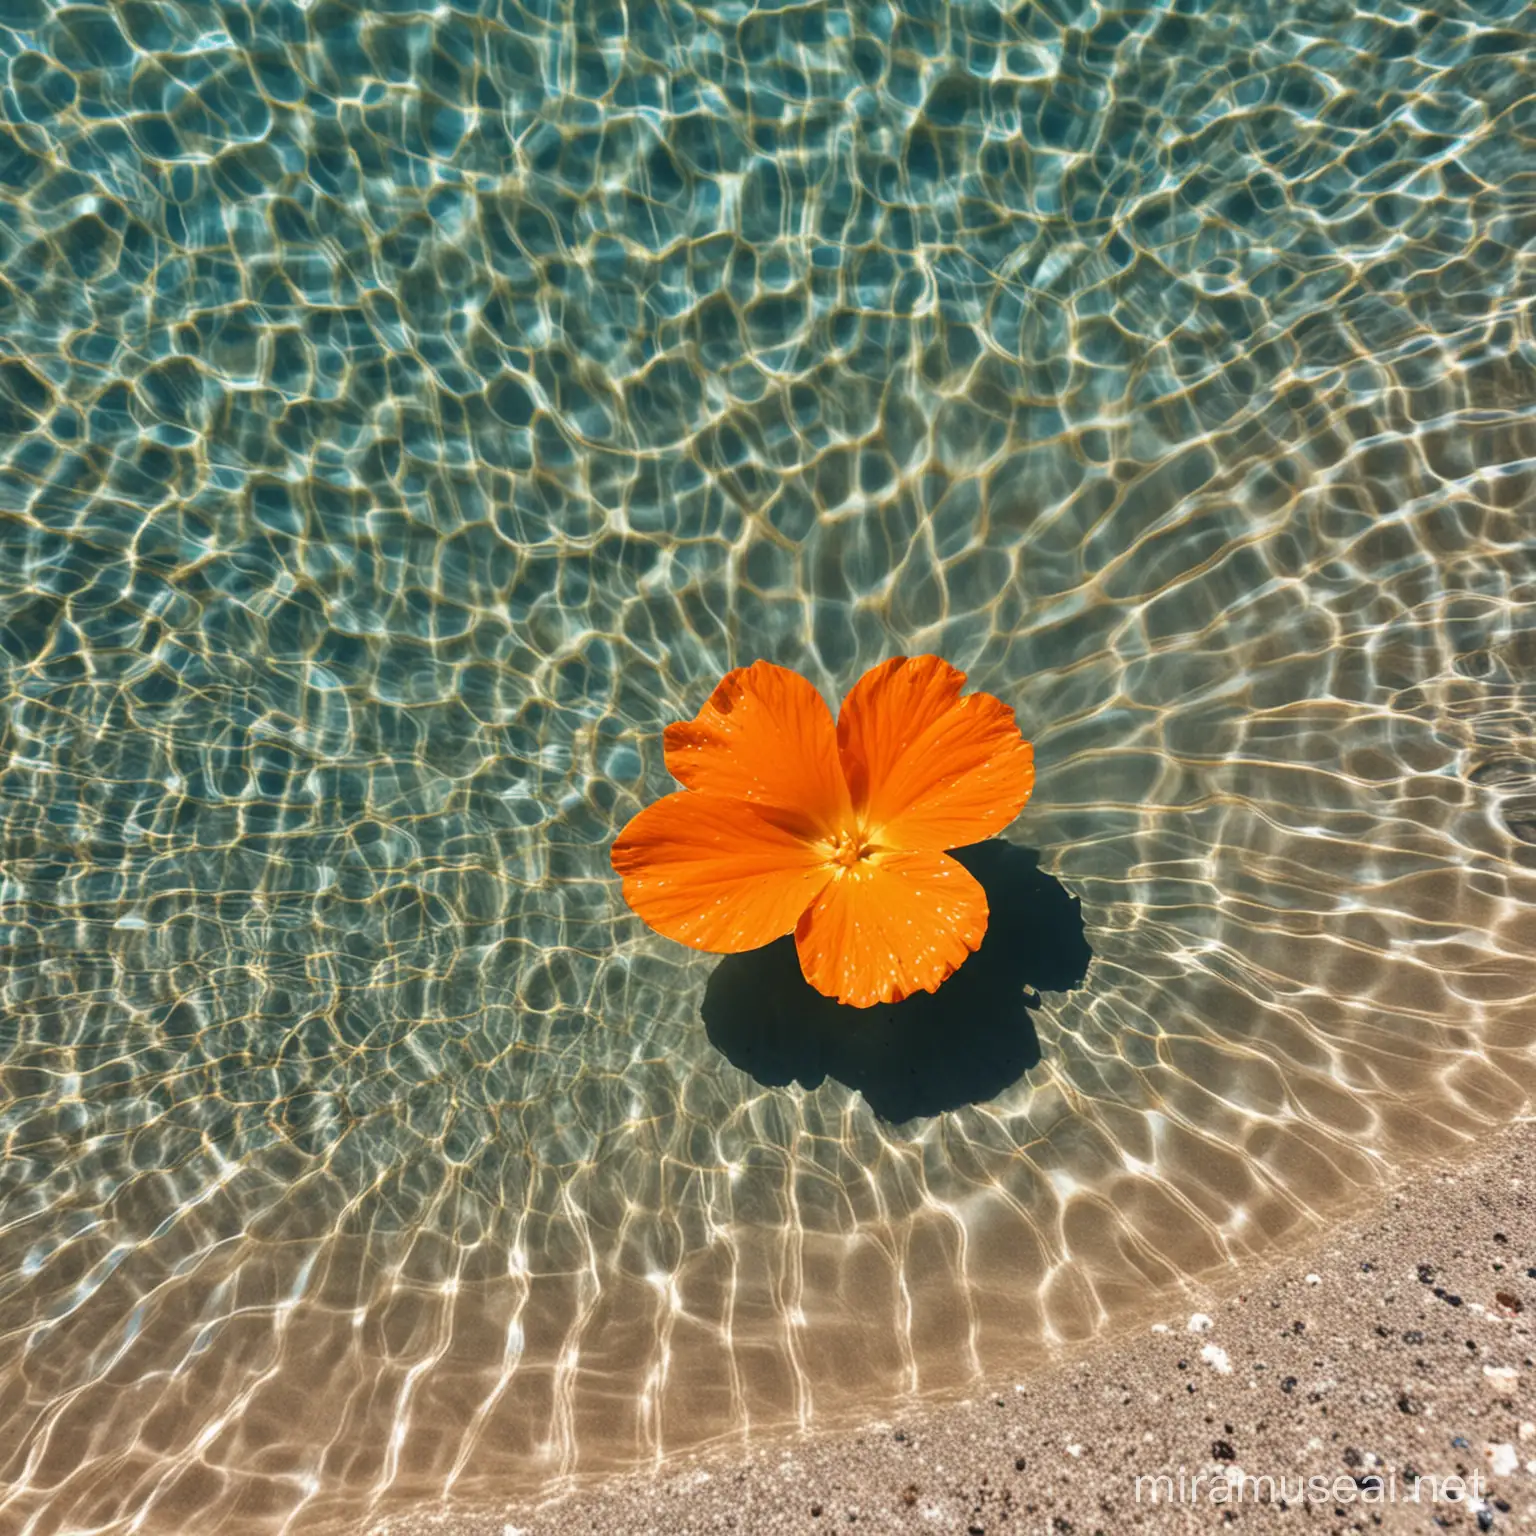 An orange petal in a clear pool of water